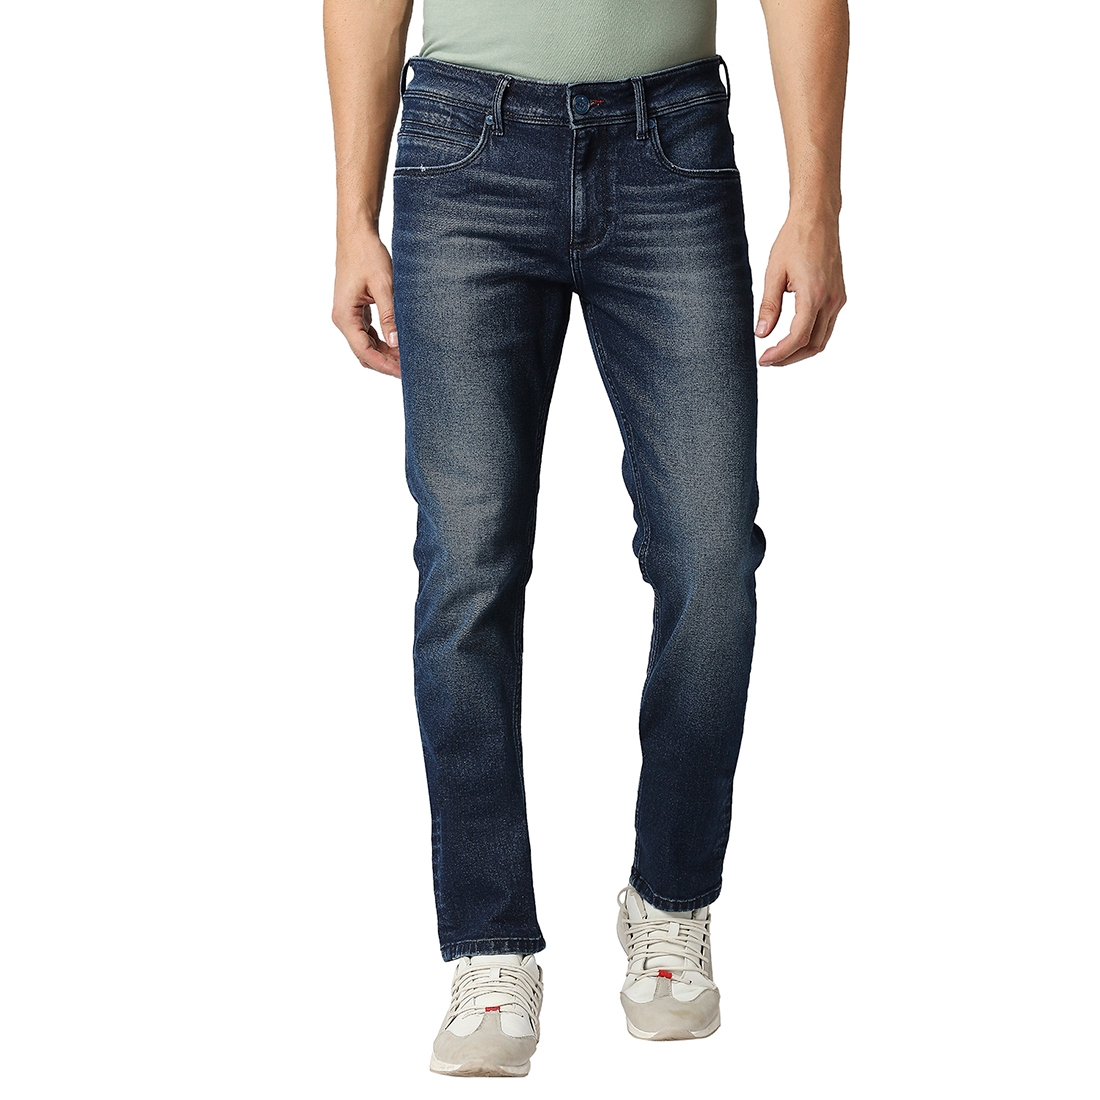 Basics | Men's Navy Cotton Blend Solid Jeans 0